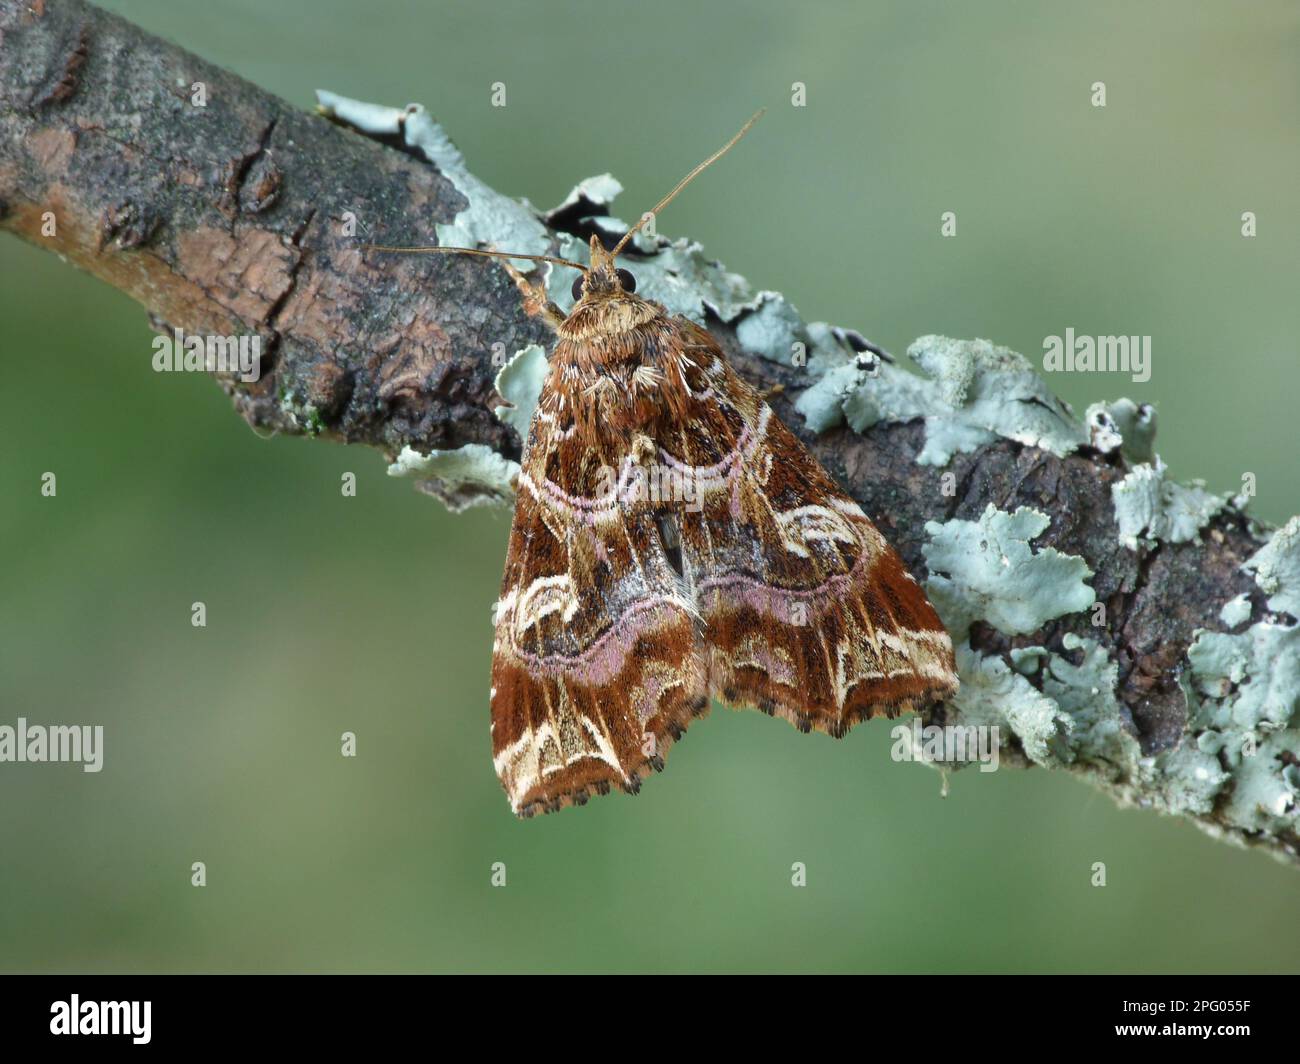 Latin (Callopistria juventina) latin adult, resting on lichen-covered branch, Cannobina Valley, Italian Alps, Piedmont, Italy Stock Photo